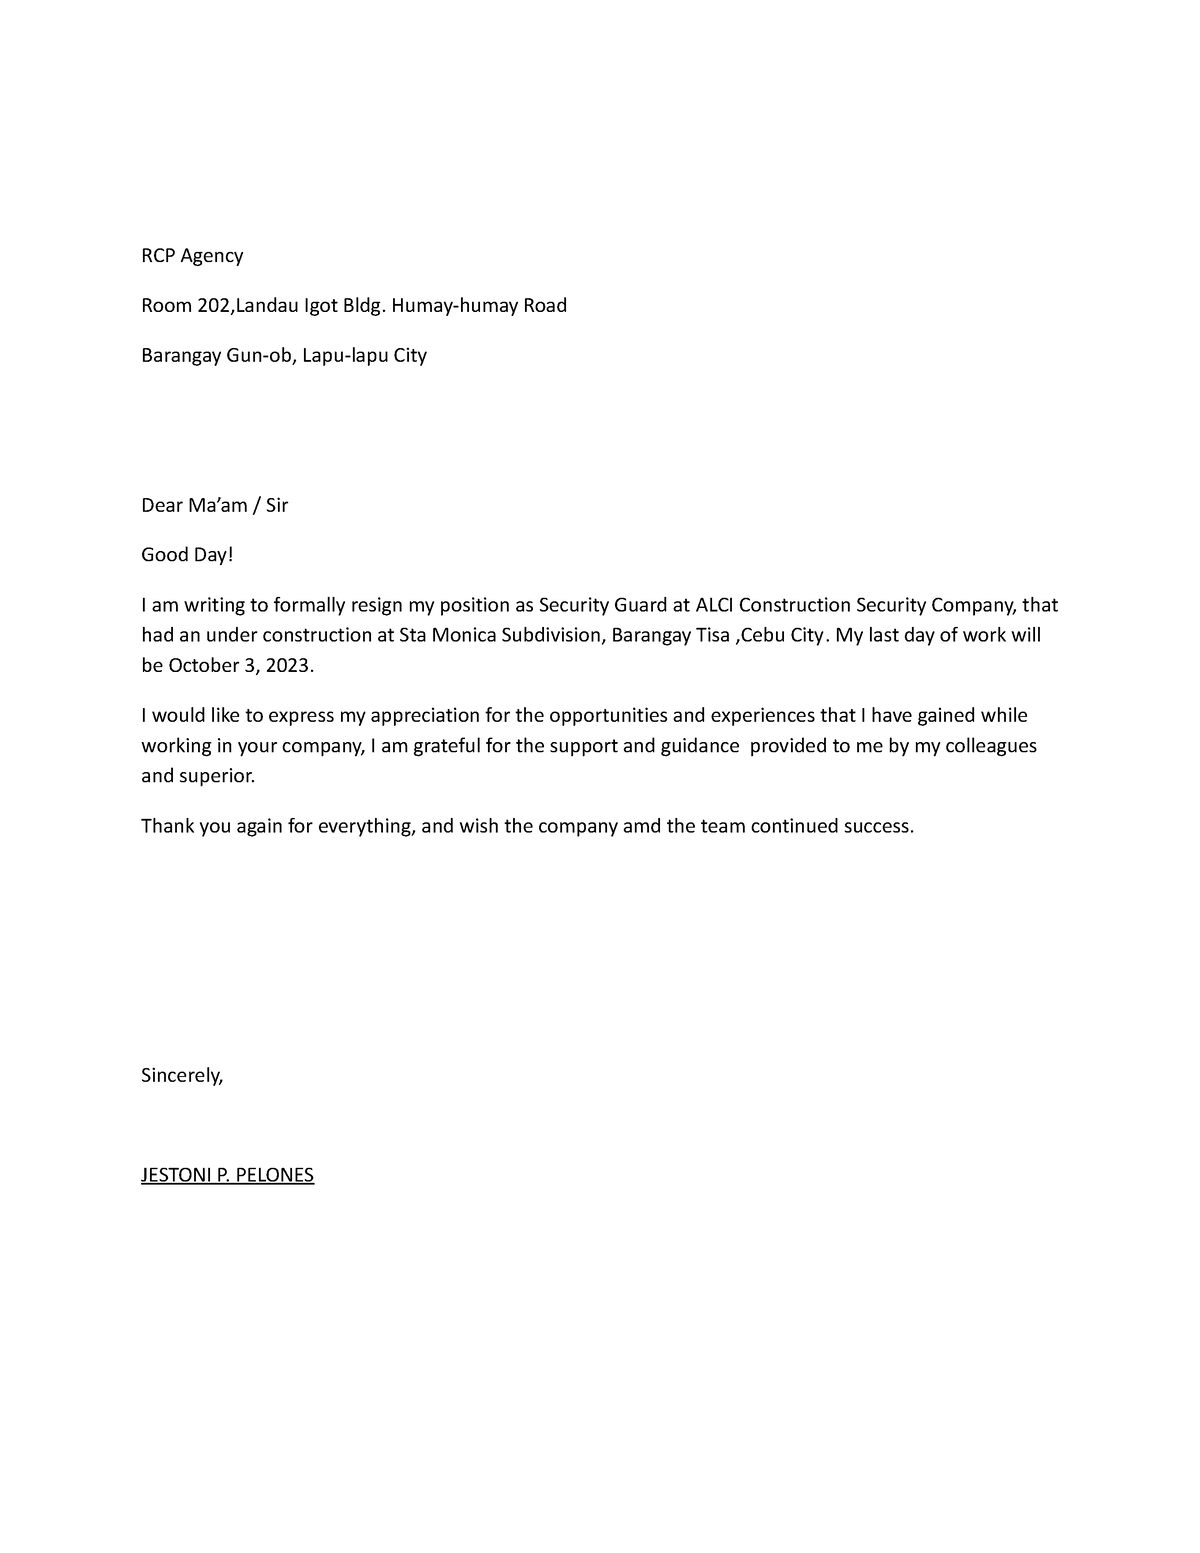 Resignation letter - Dhhh - RCP Agency Room 202,Landau Igot Bldg. Humay ...